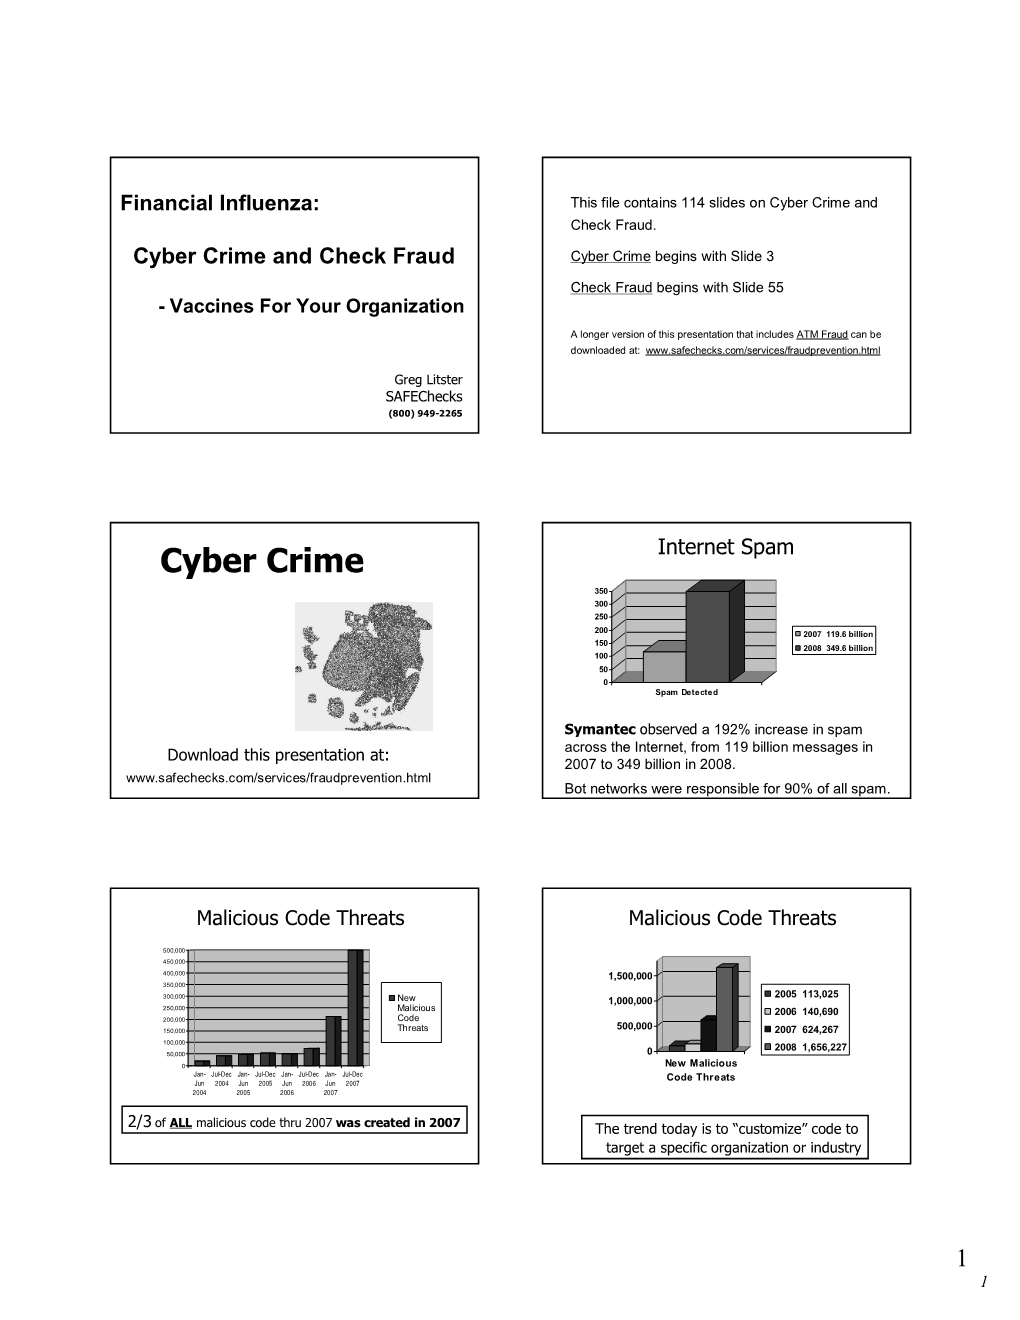 Financial Influenza Cyber Crime Check Fraud